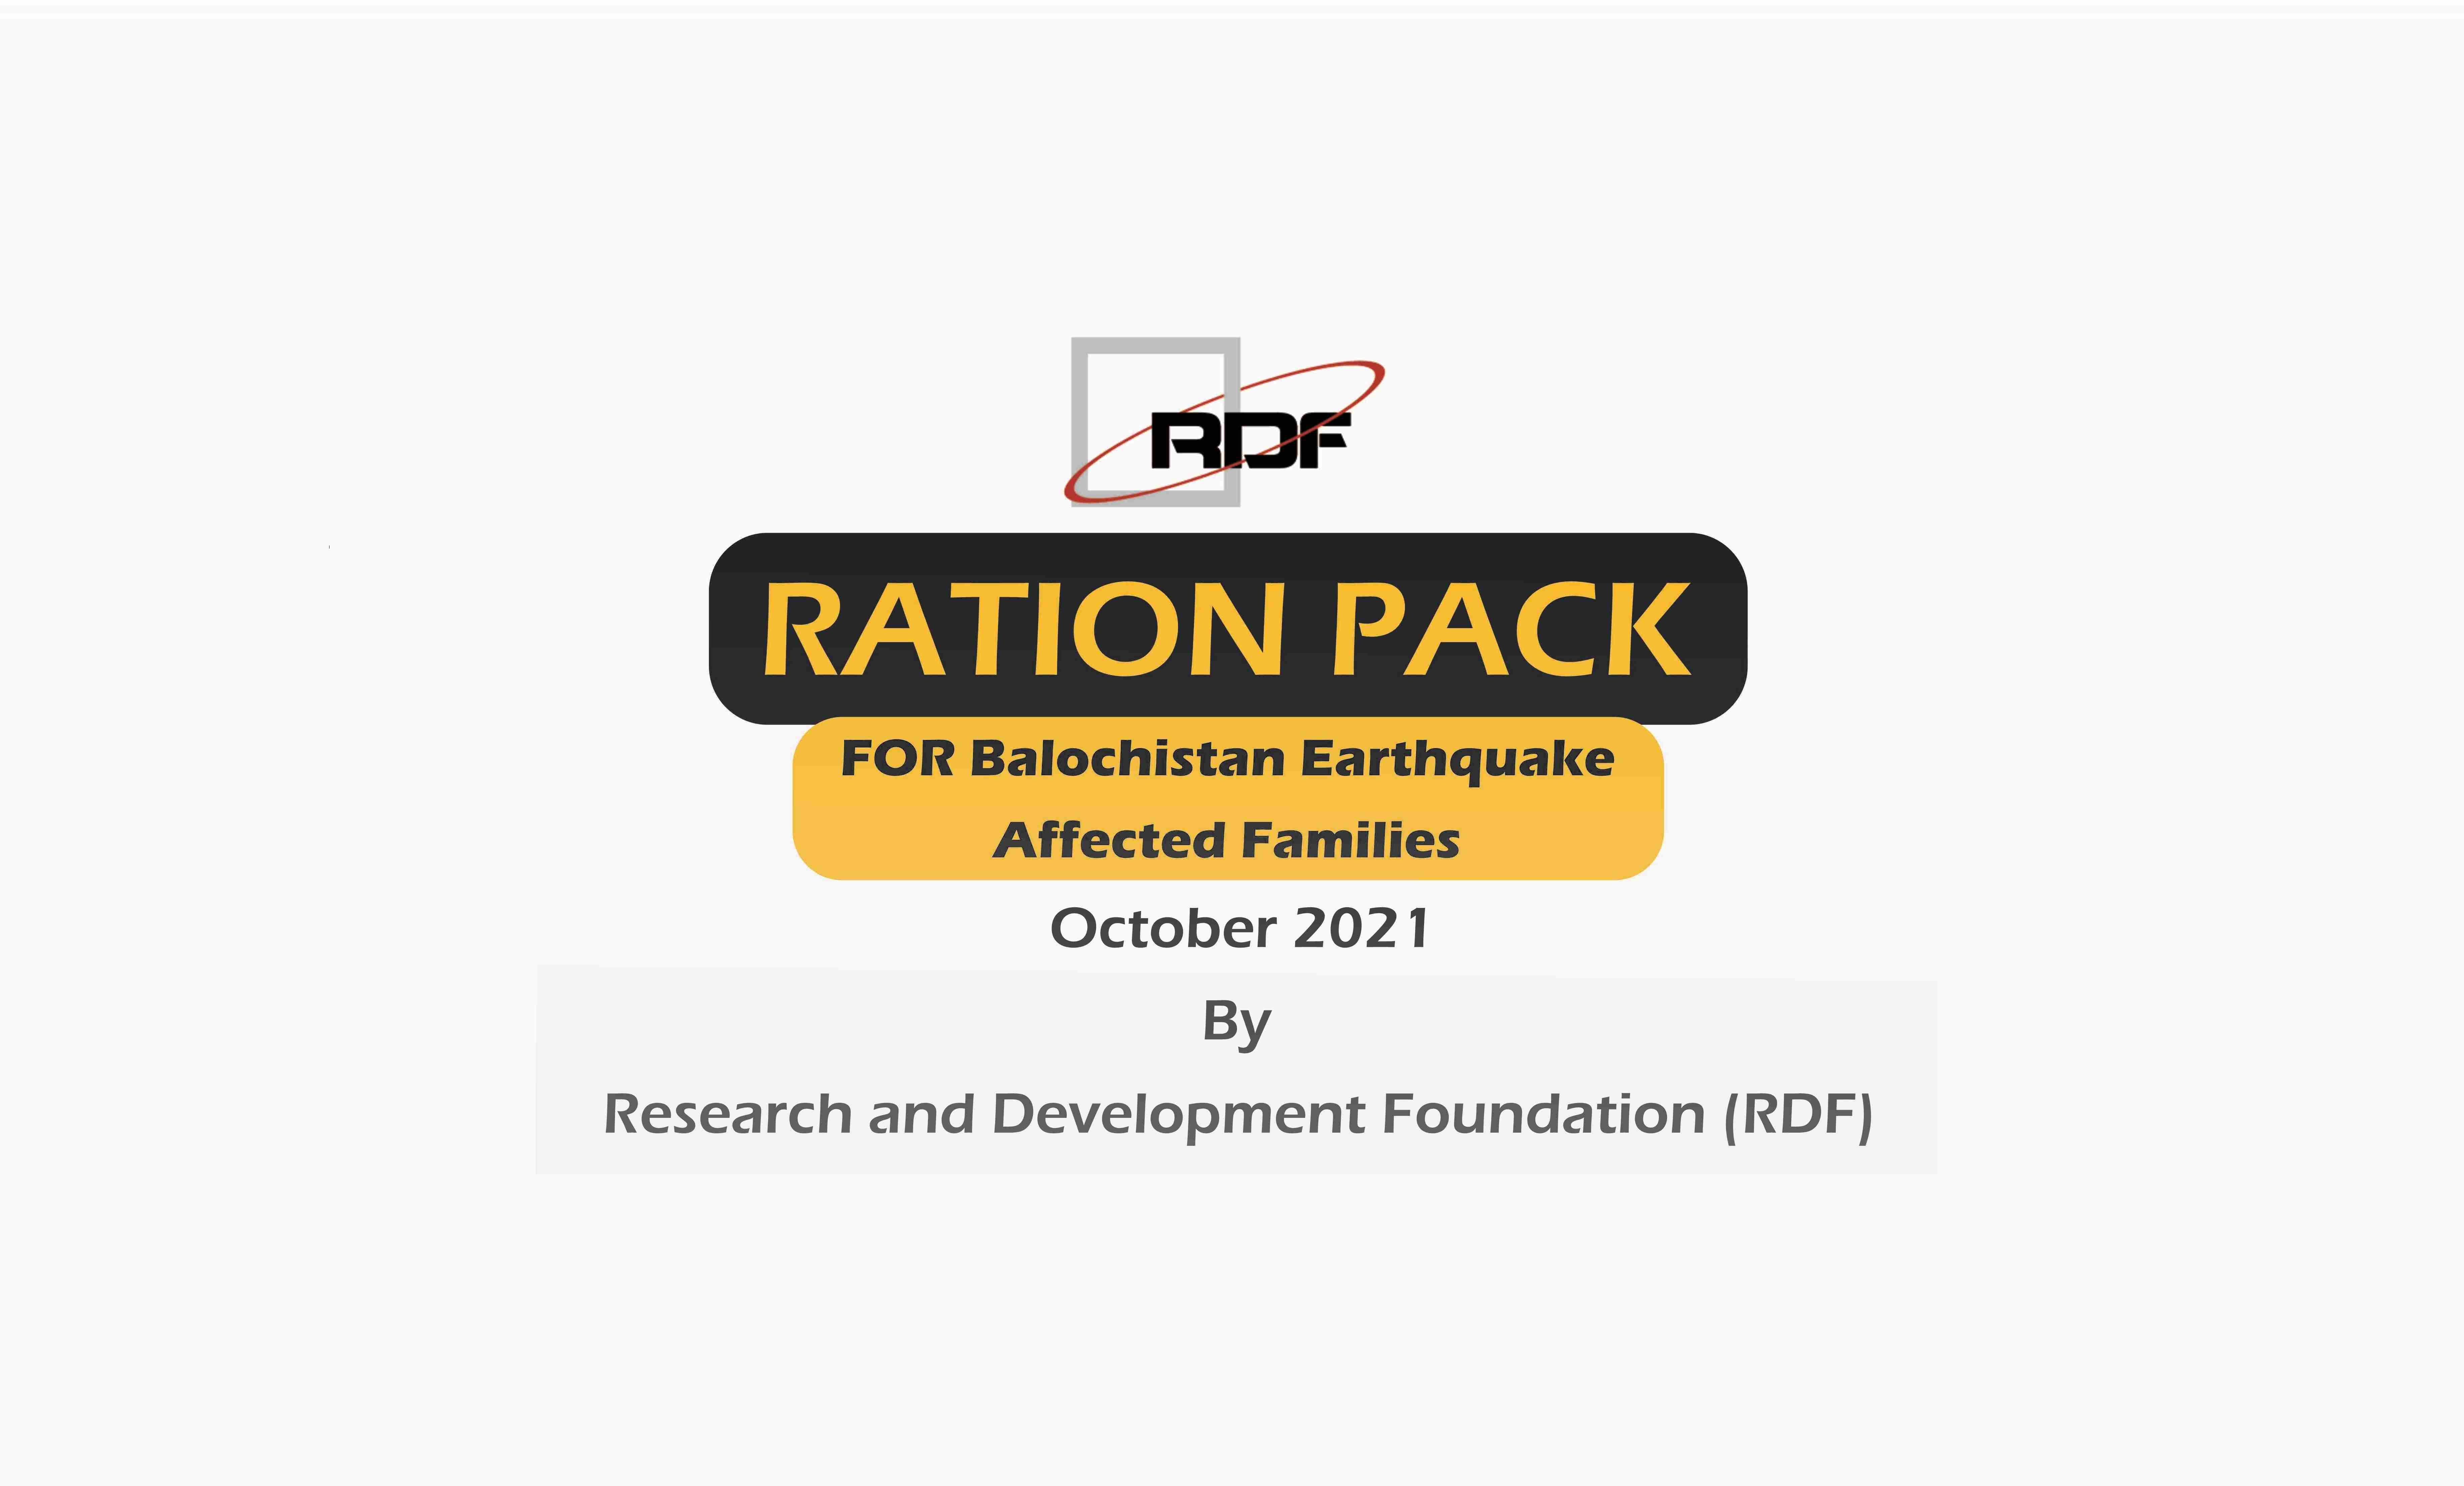 Distribution of Ration Packs